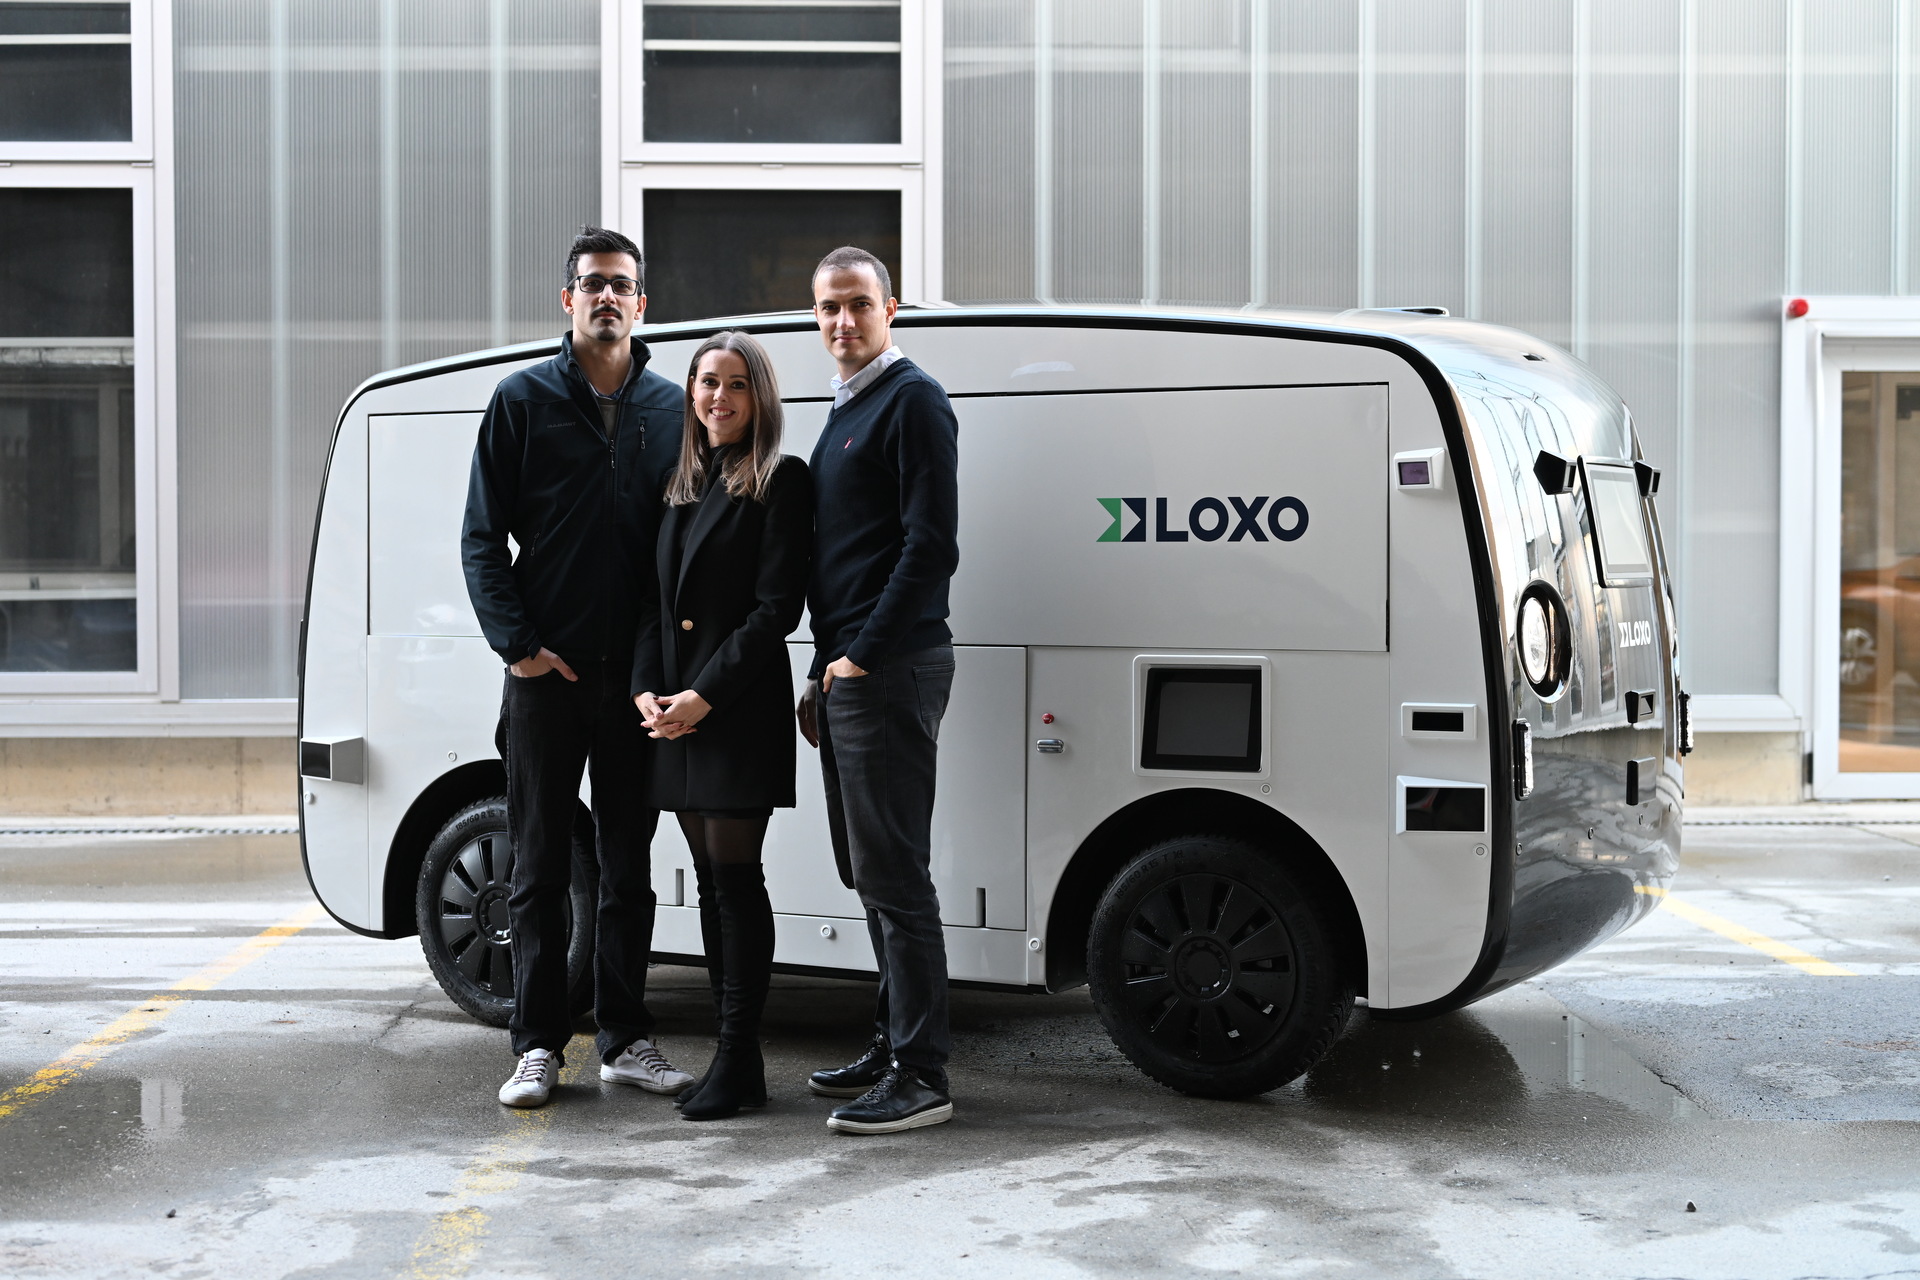 LOXO: Amin Amini, Lara Amini-Rentsch และ Claudio Panizza ผู้ก่อตั้ง LOXO บริษัทสตาร์ทอัพแห่งเบิร์น ได้สร้าง Alpha ขึ้นในสวิตเซอร์แลนด์ทั้งหมด ซึ่งเป็นรถตู้ไร้คนขับสำหรับขนส่งระยะสั้น